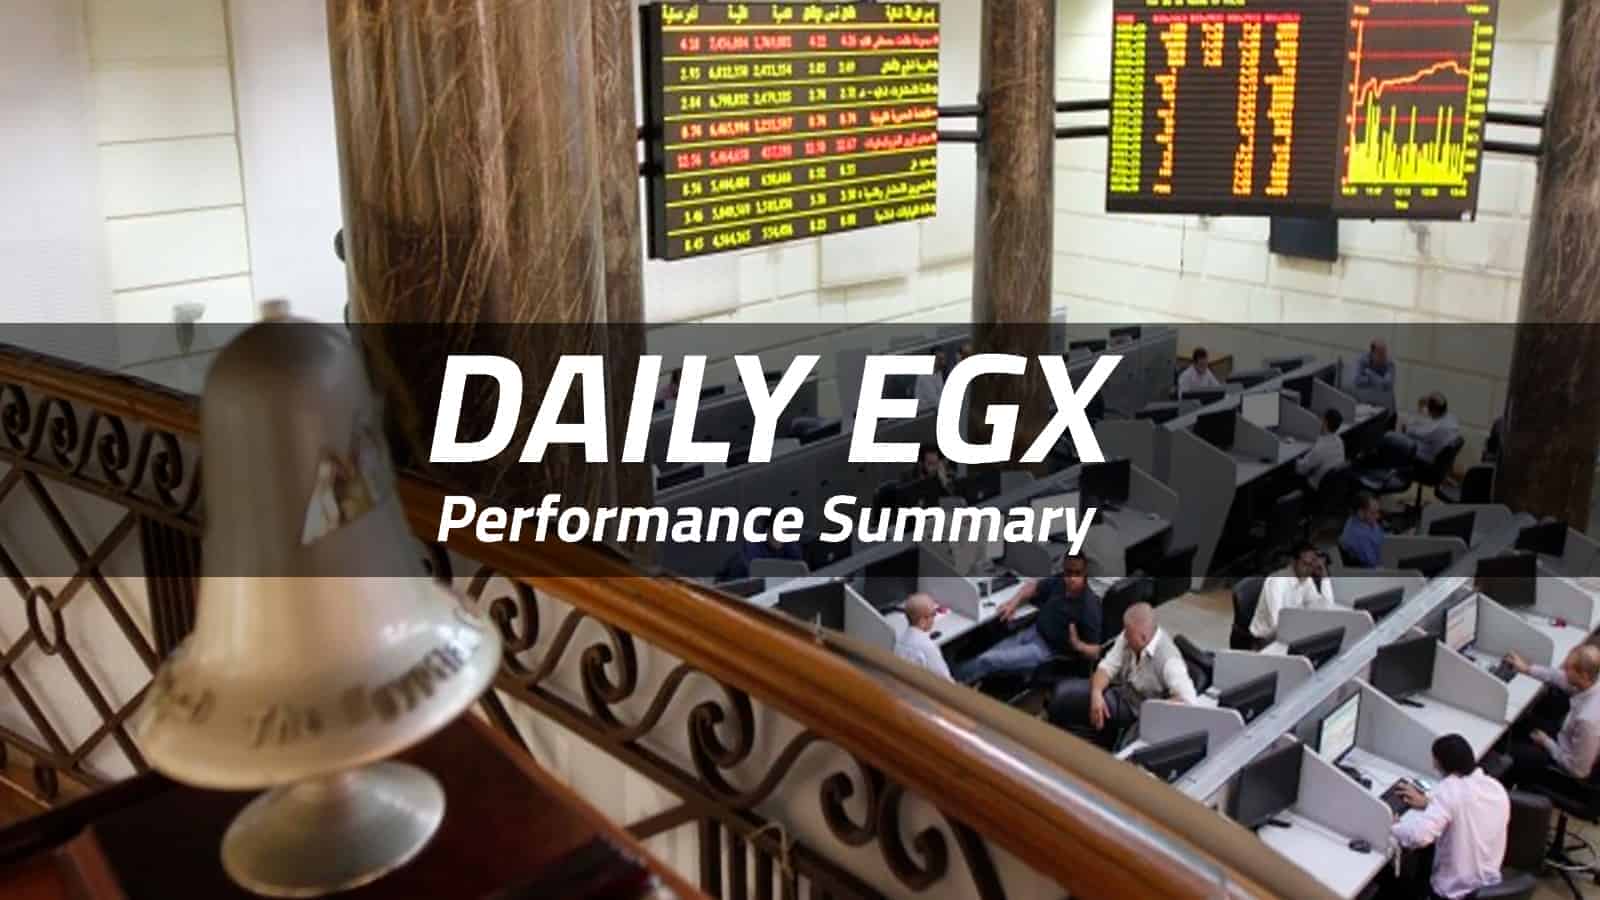 EGX sees downward trend on Wednesday